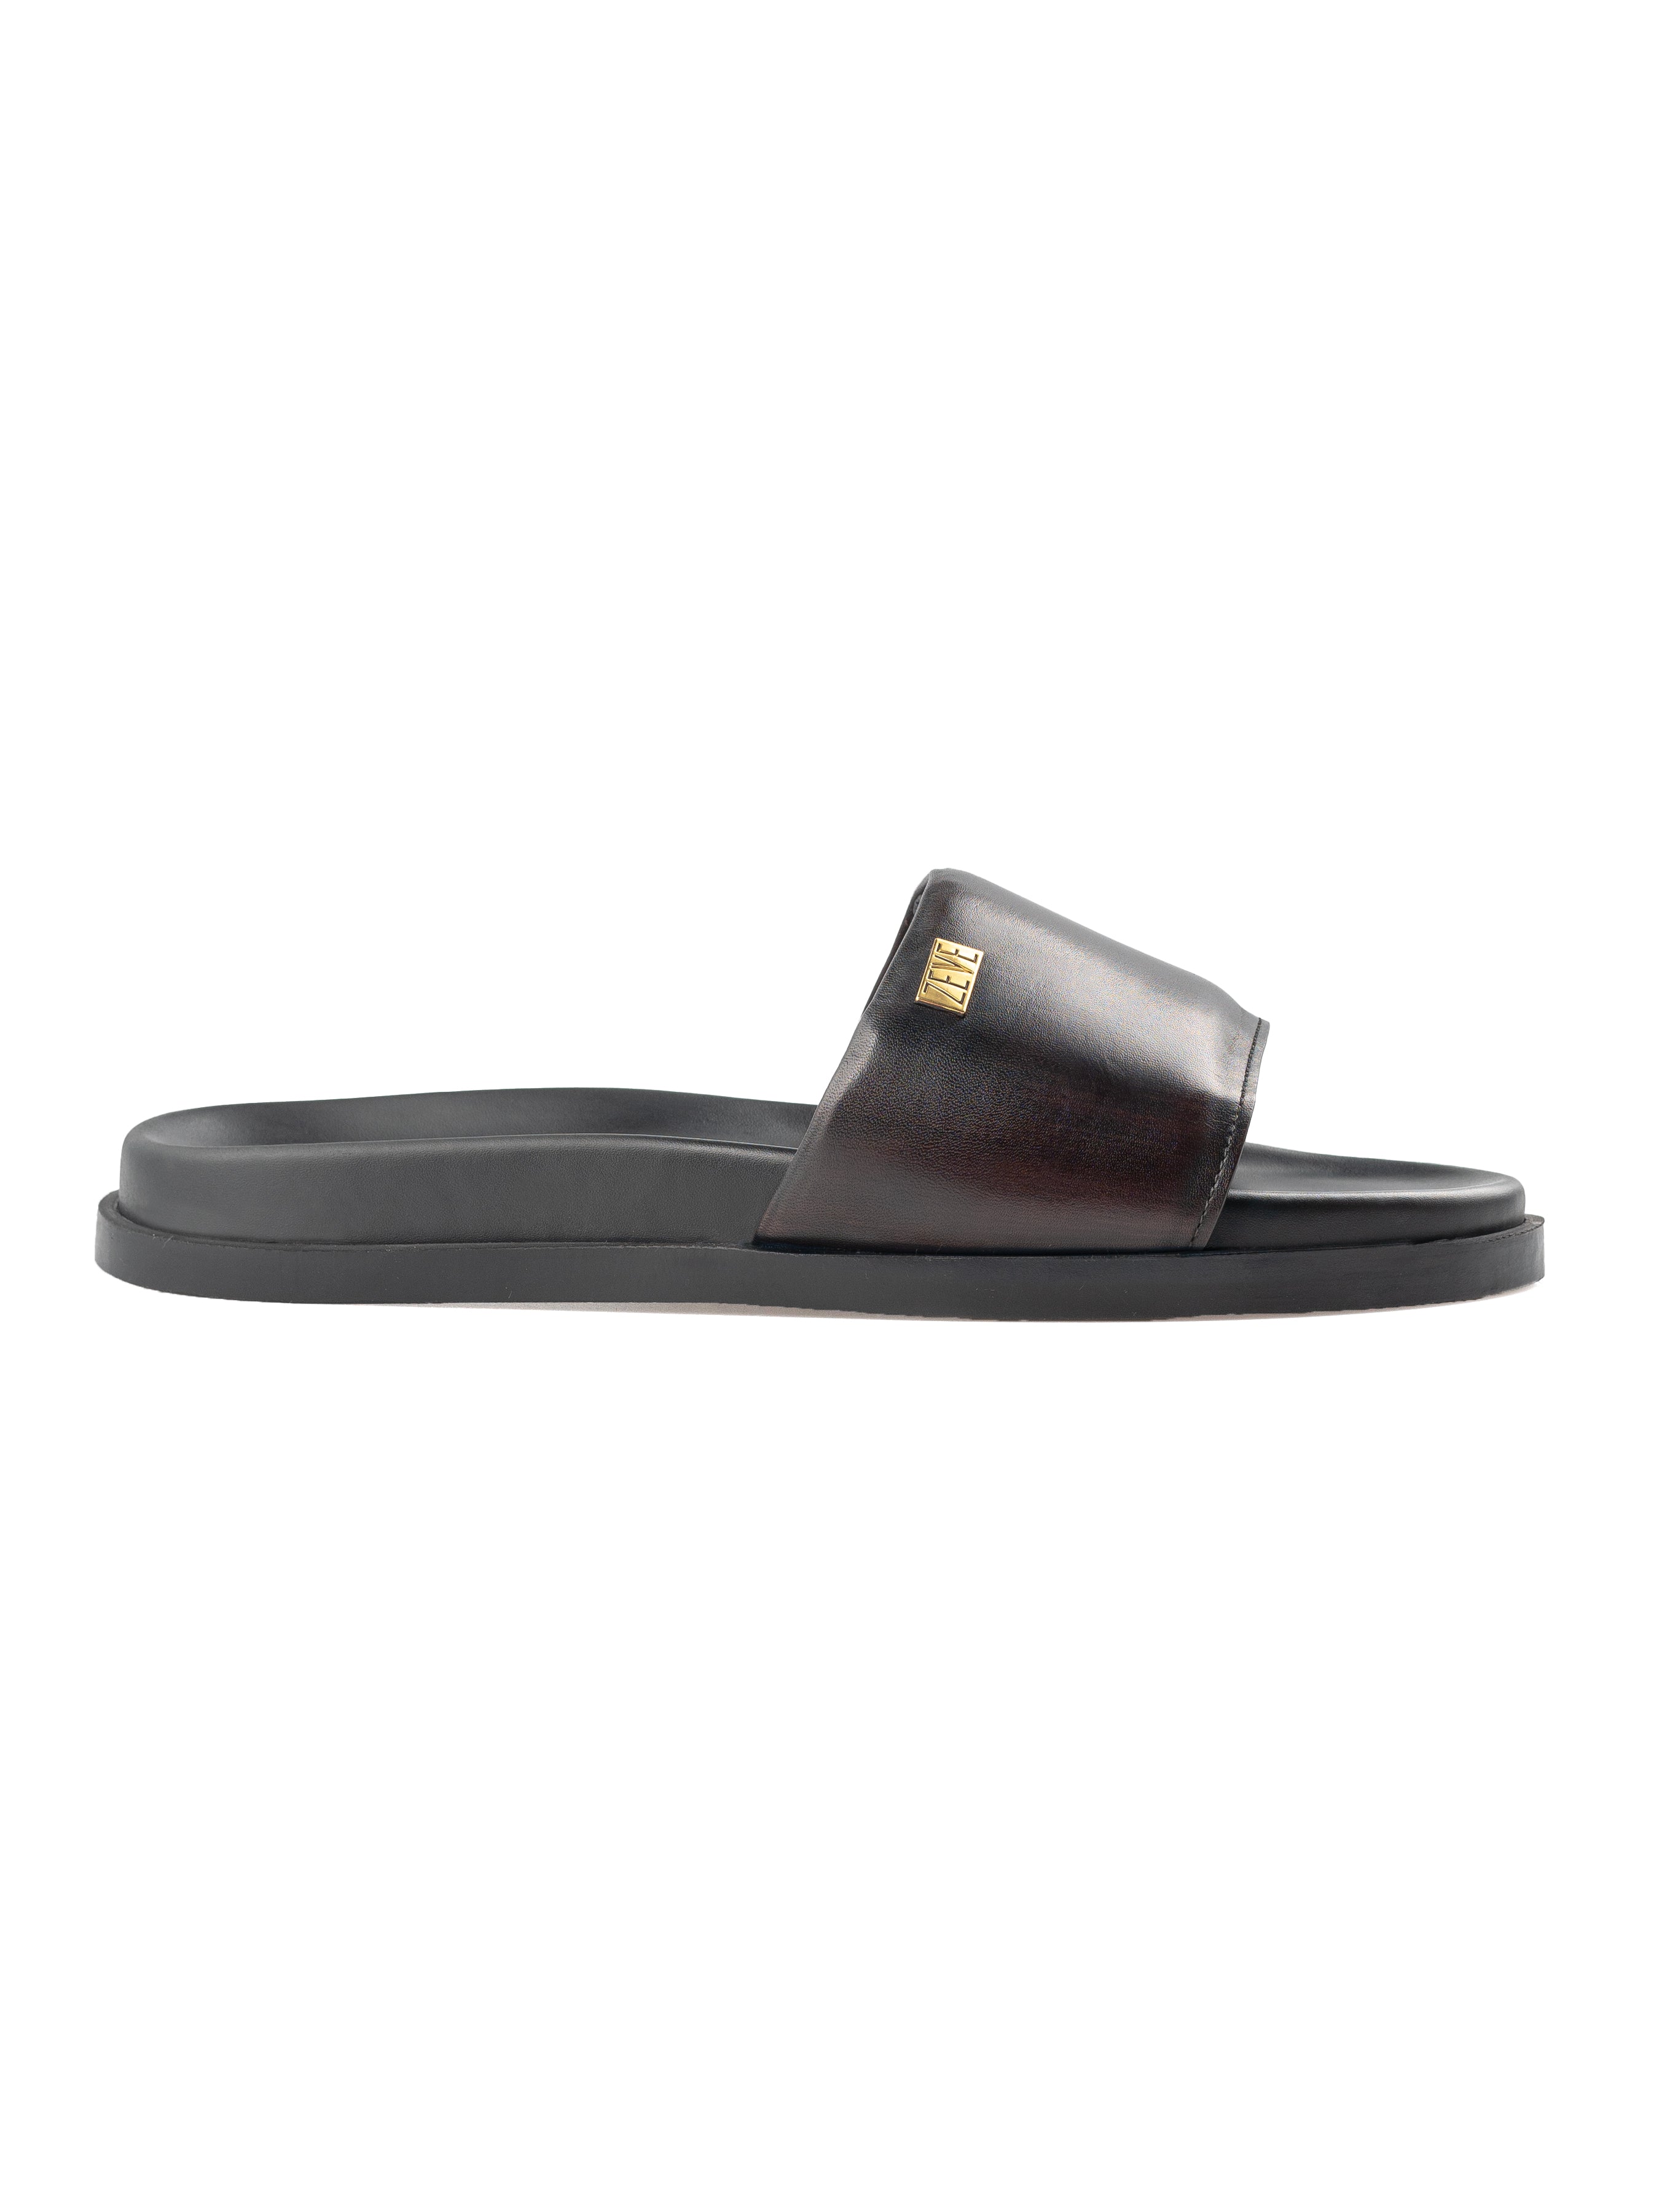 Slide Sandal - Coffee Patina Leather